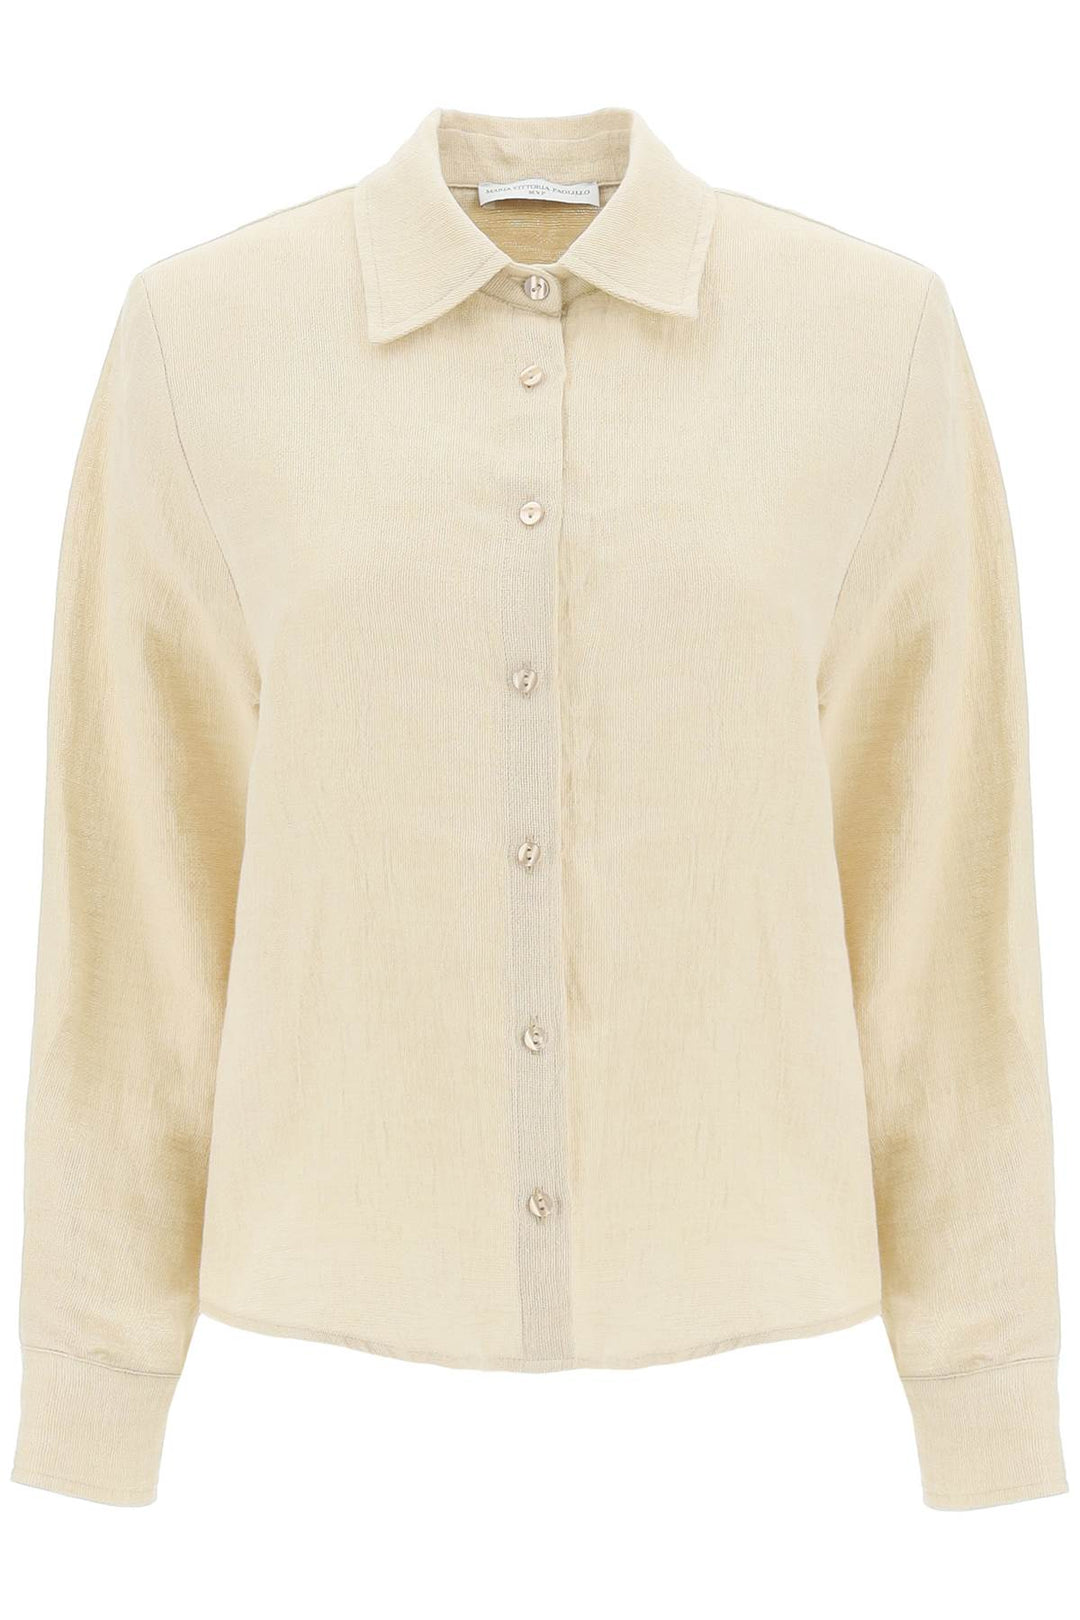 Mvp Wardrobe 'Malibu' Cotton Linen Shirt   Beige